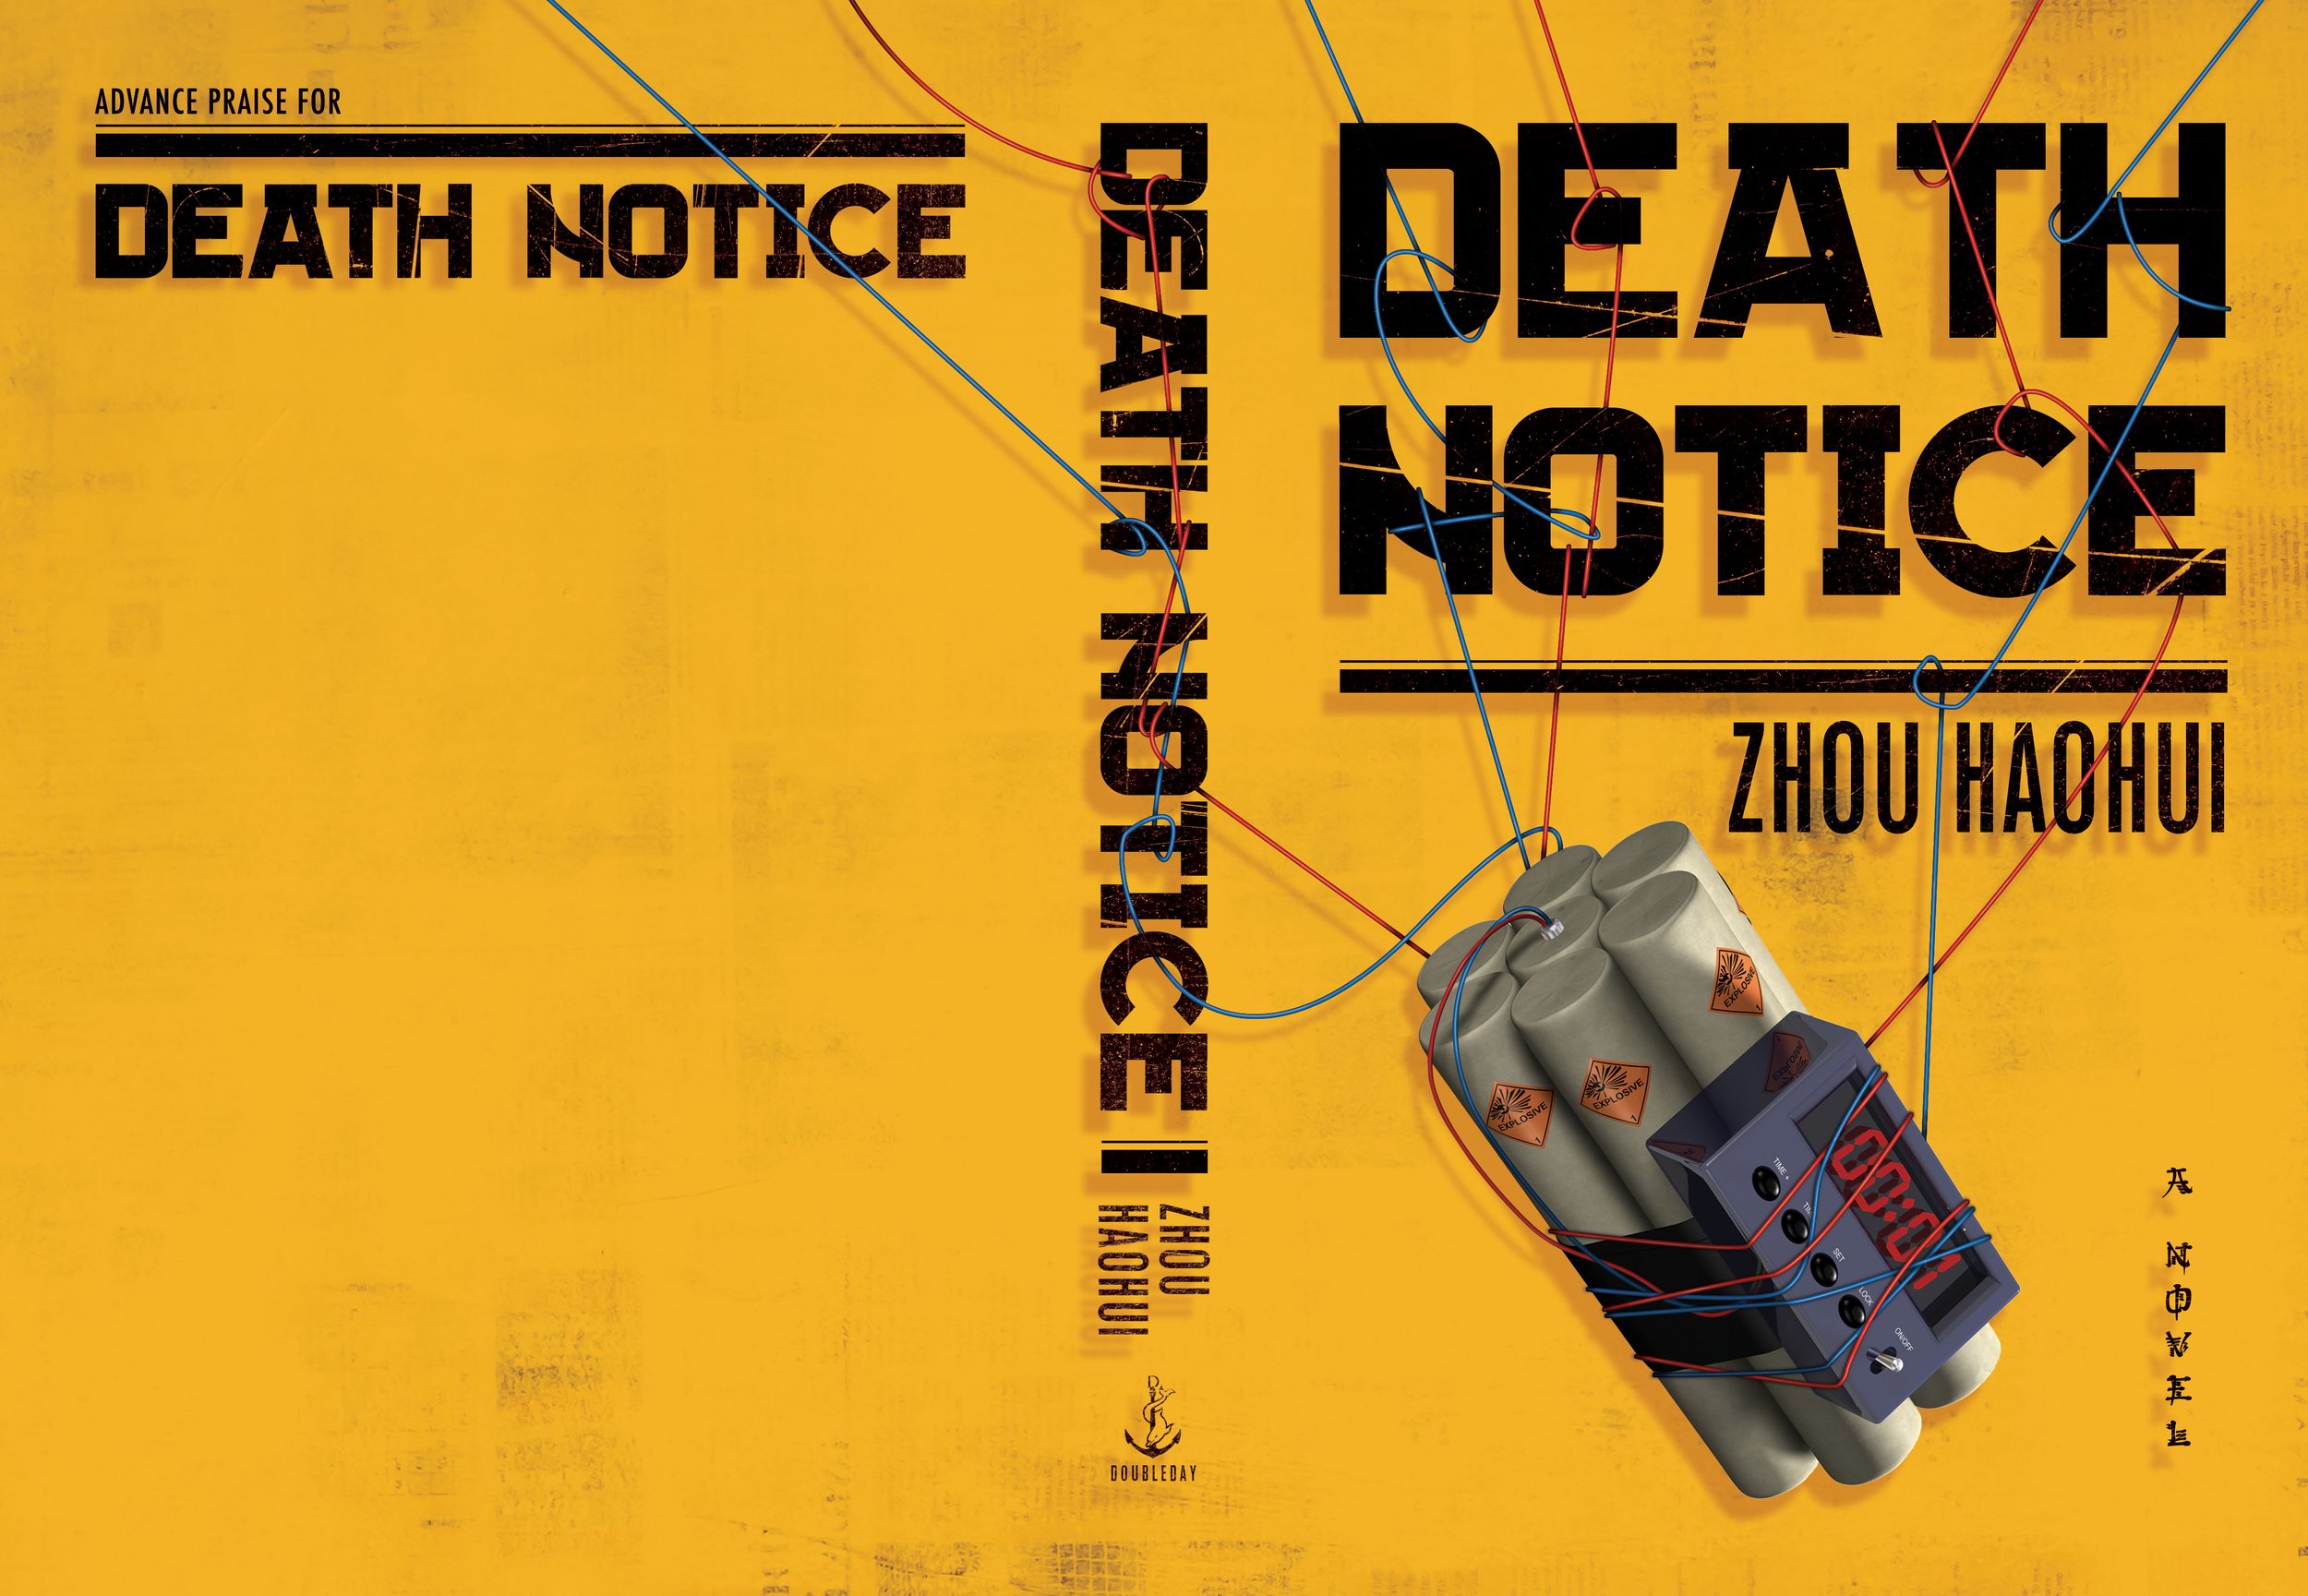 Death Nottice art revised.jpg